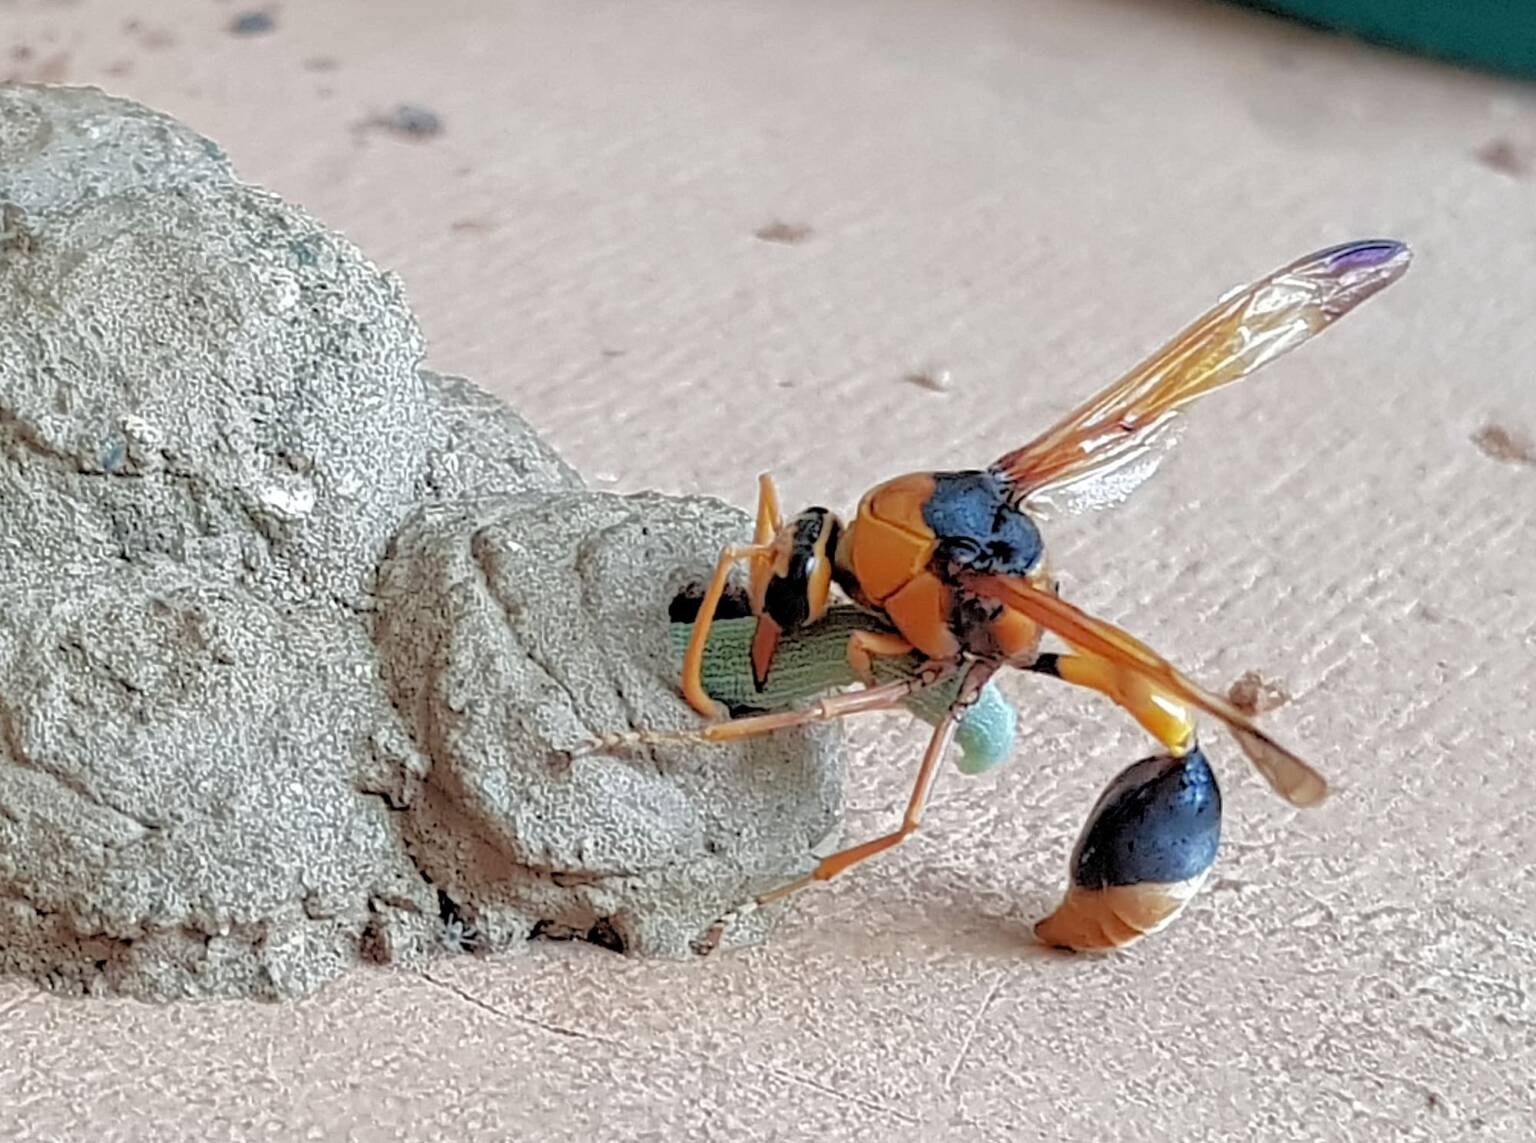 Stocking the larder of the Mud Wasp (Eumenes latreilli), Alice Springs, NT